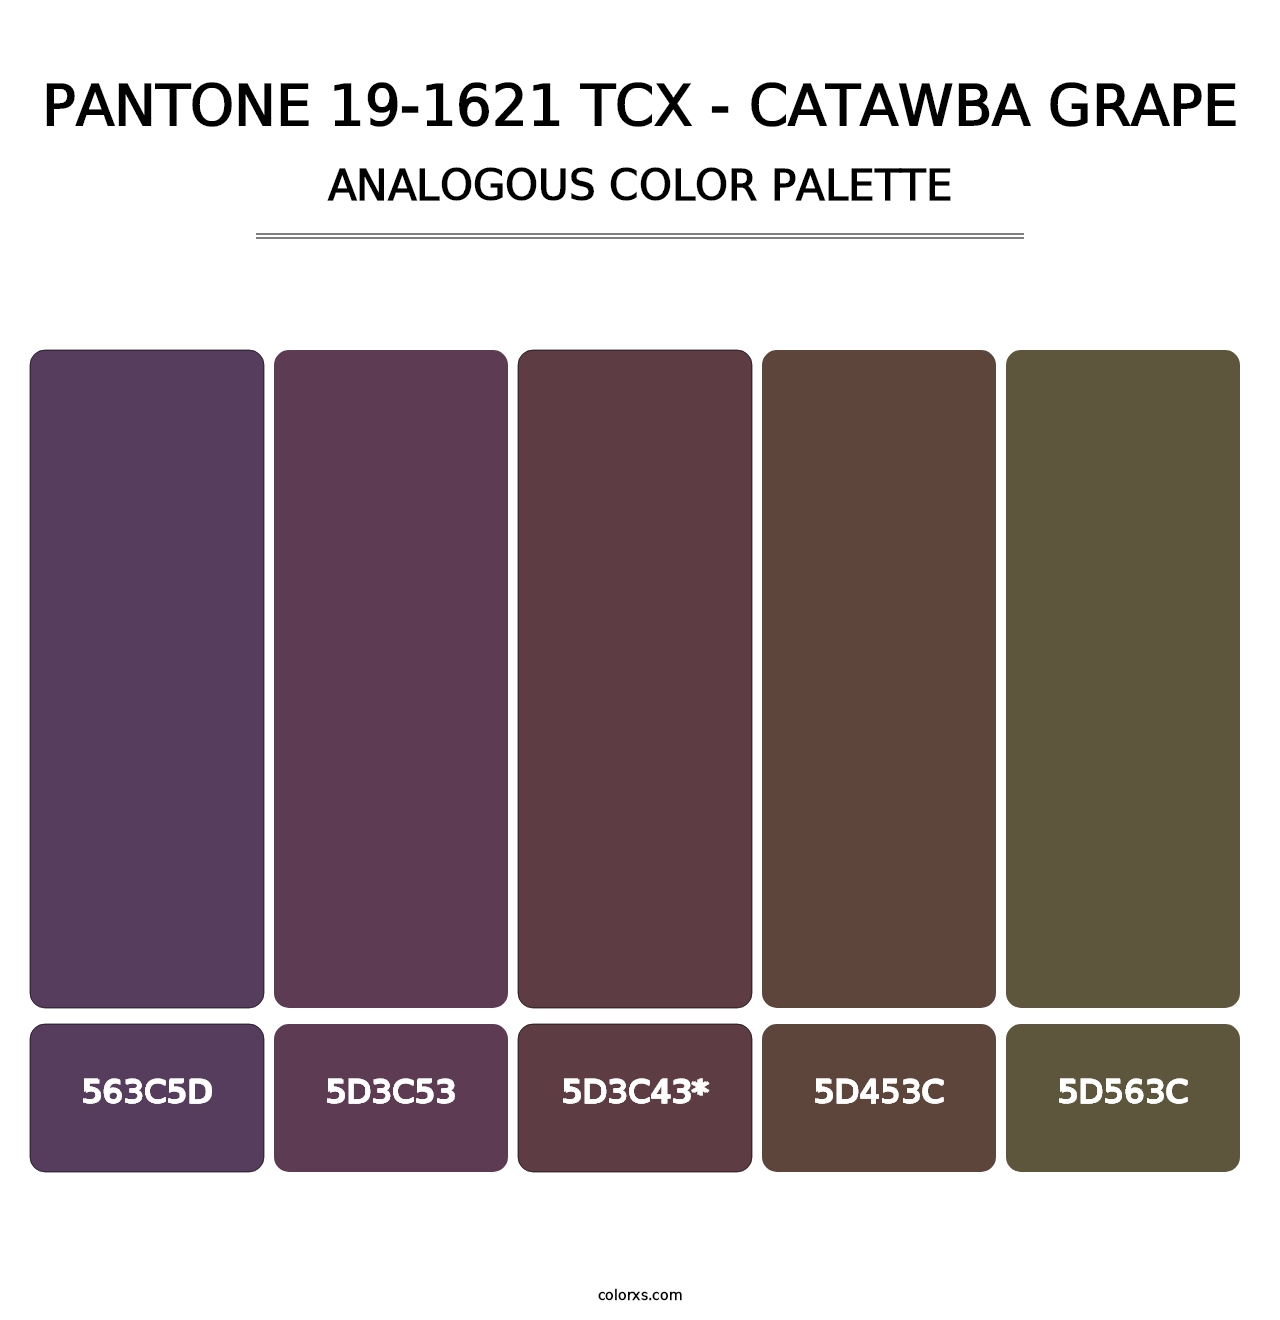 PANTONE 19-1621 TCX - Catawba Grape - Analogous Color Palette